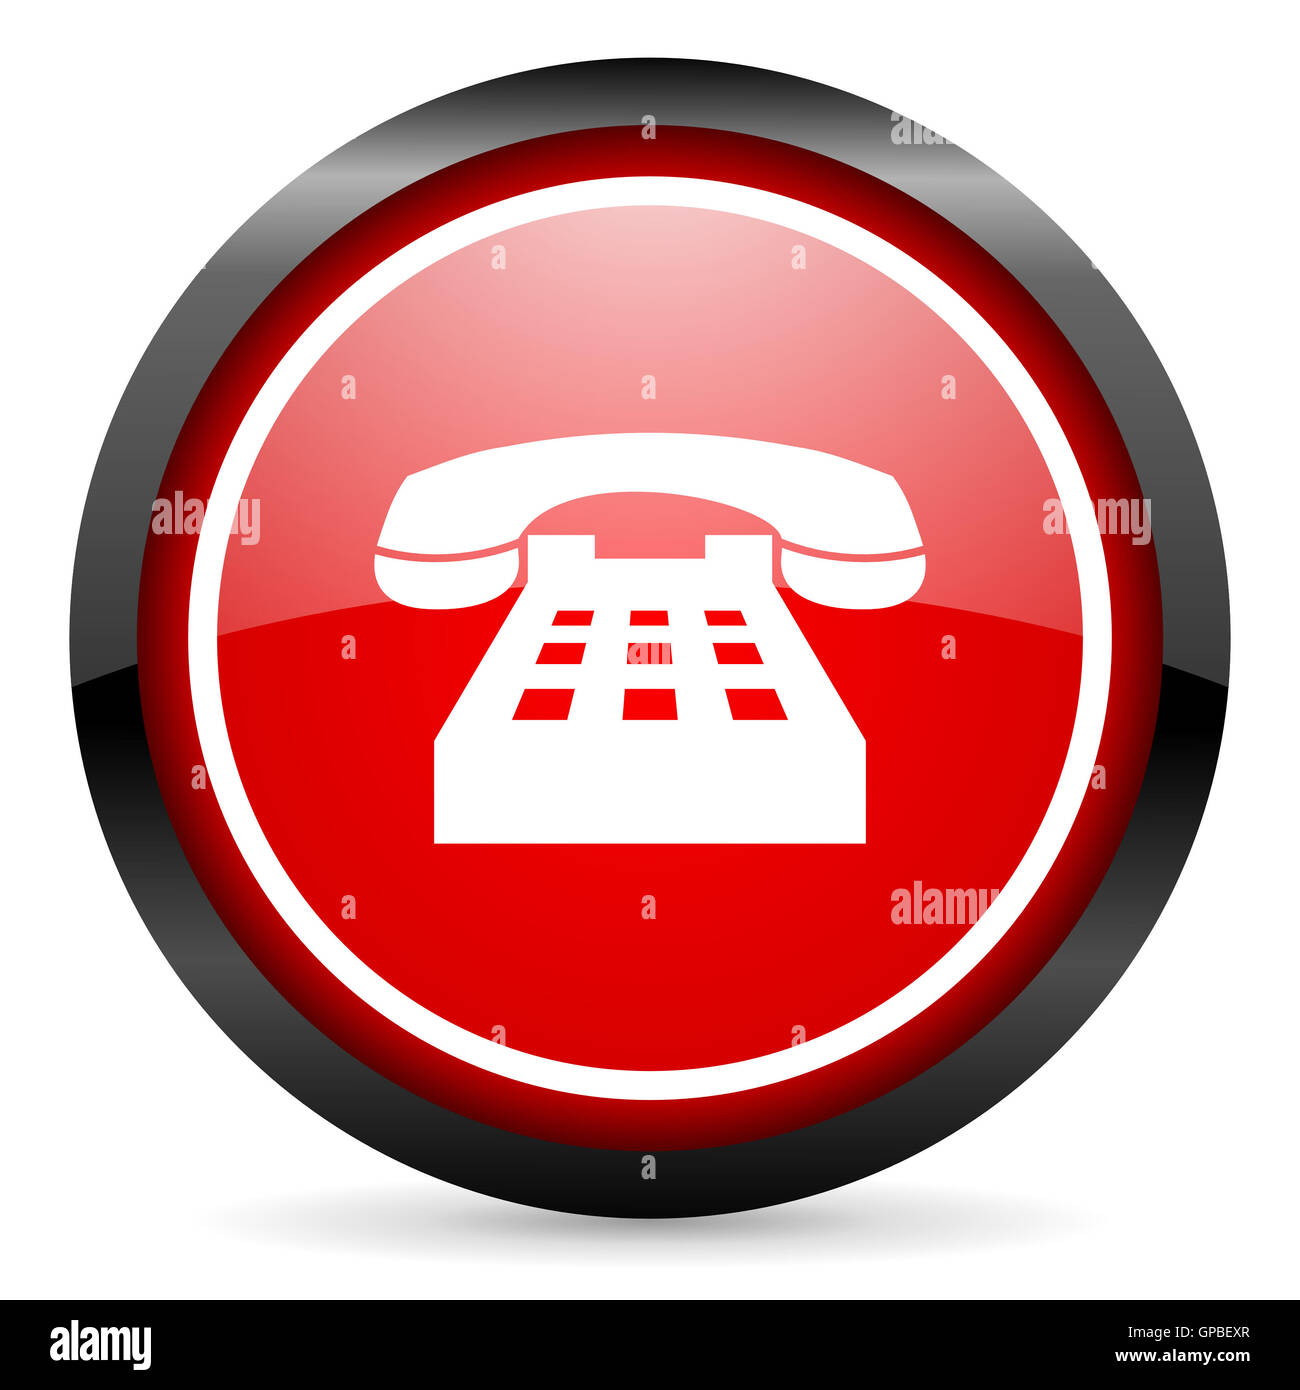 telephone round red glossy icon on white background Stock Photo - Alamy